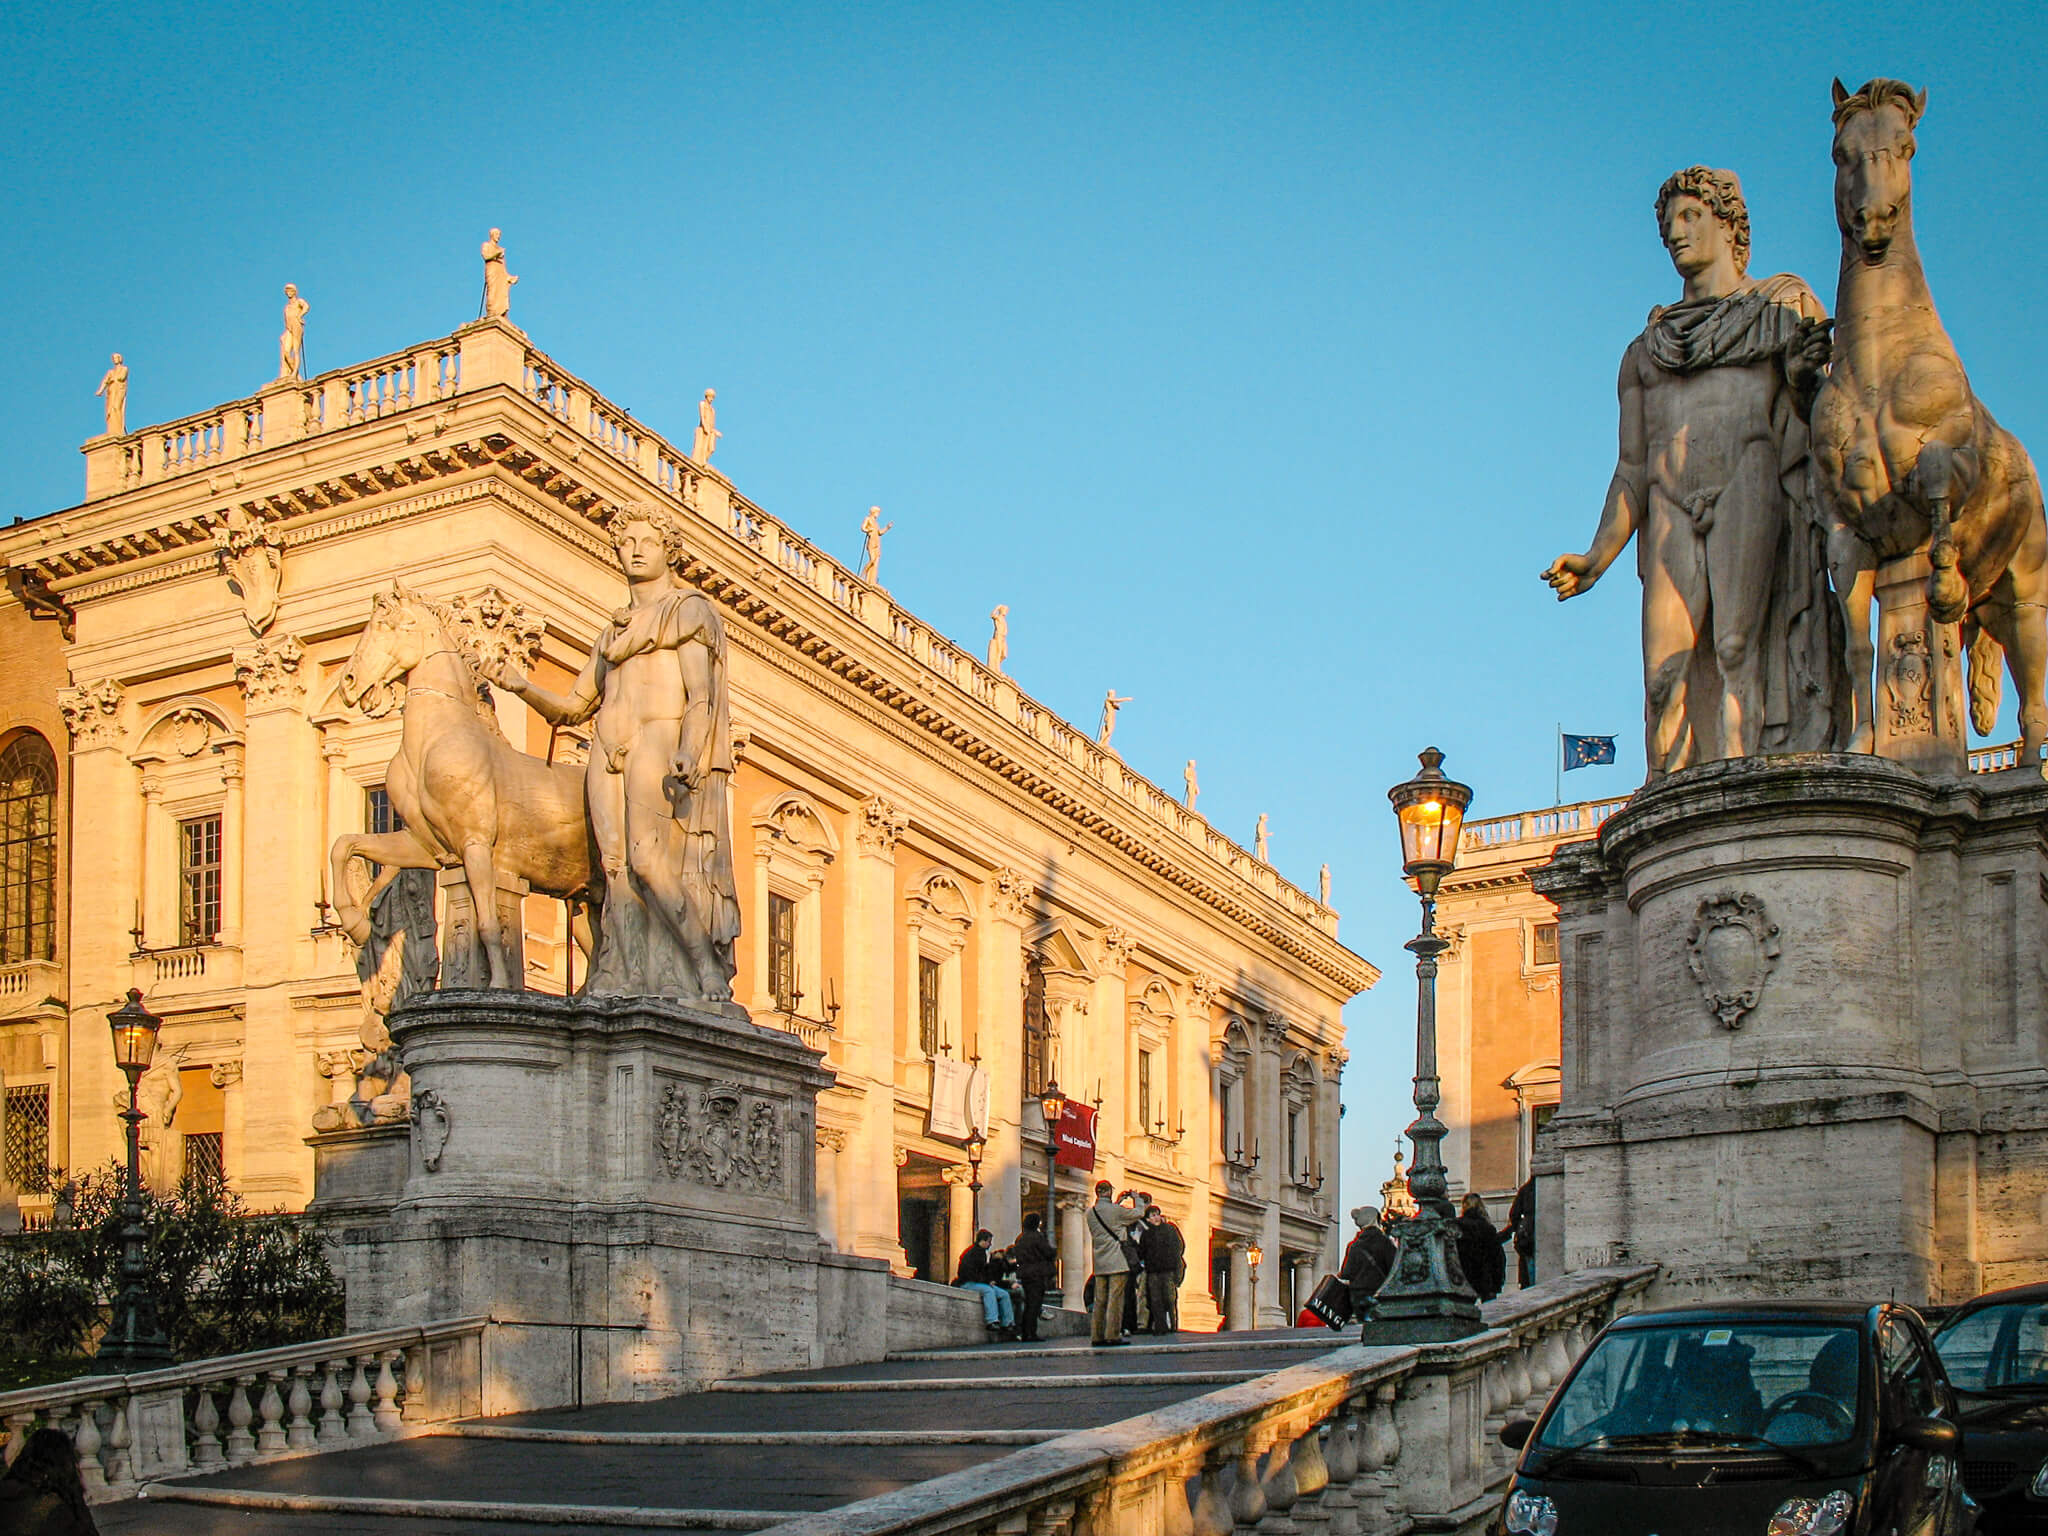 Castor and Pollux statues at the entrance to Piazza del Campidoglio in Rome